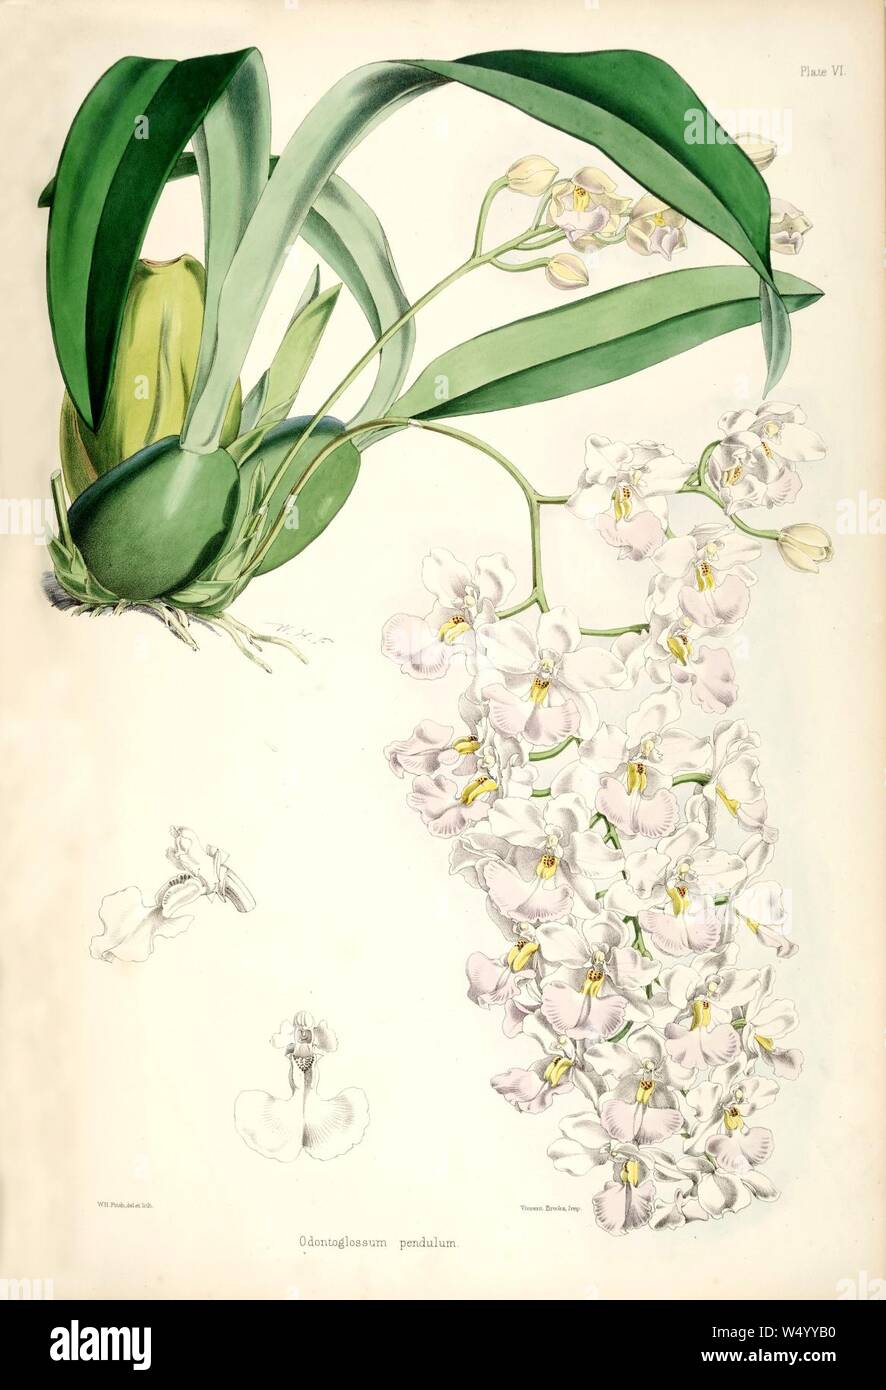 Cuitlauzina pendula (as Odontoglossum pendulum) - pl. 6 - Bateman, Monogr. Odont. Stock Photo